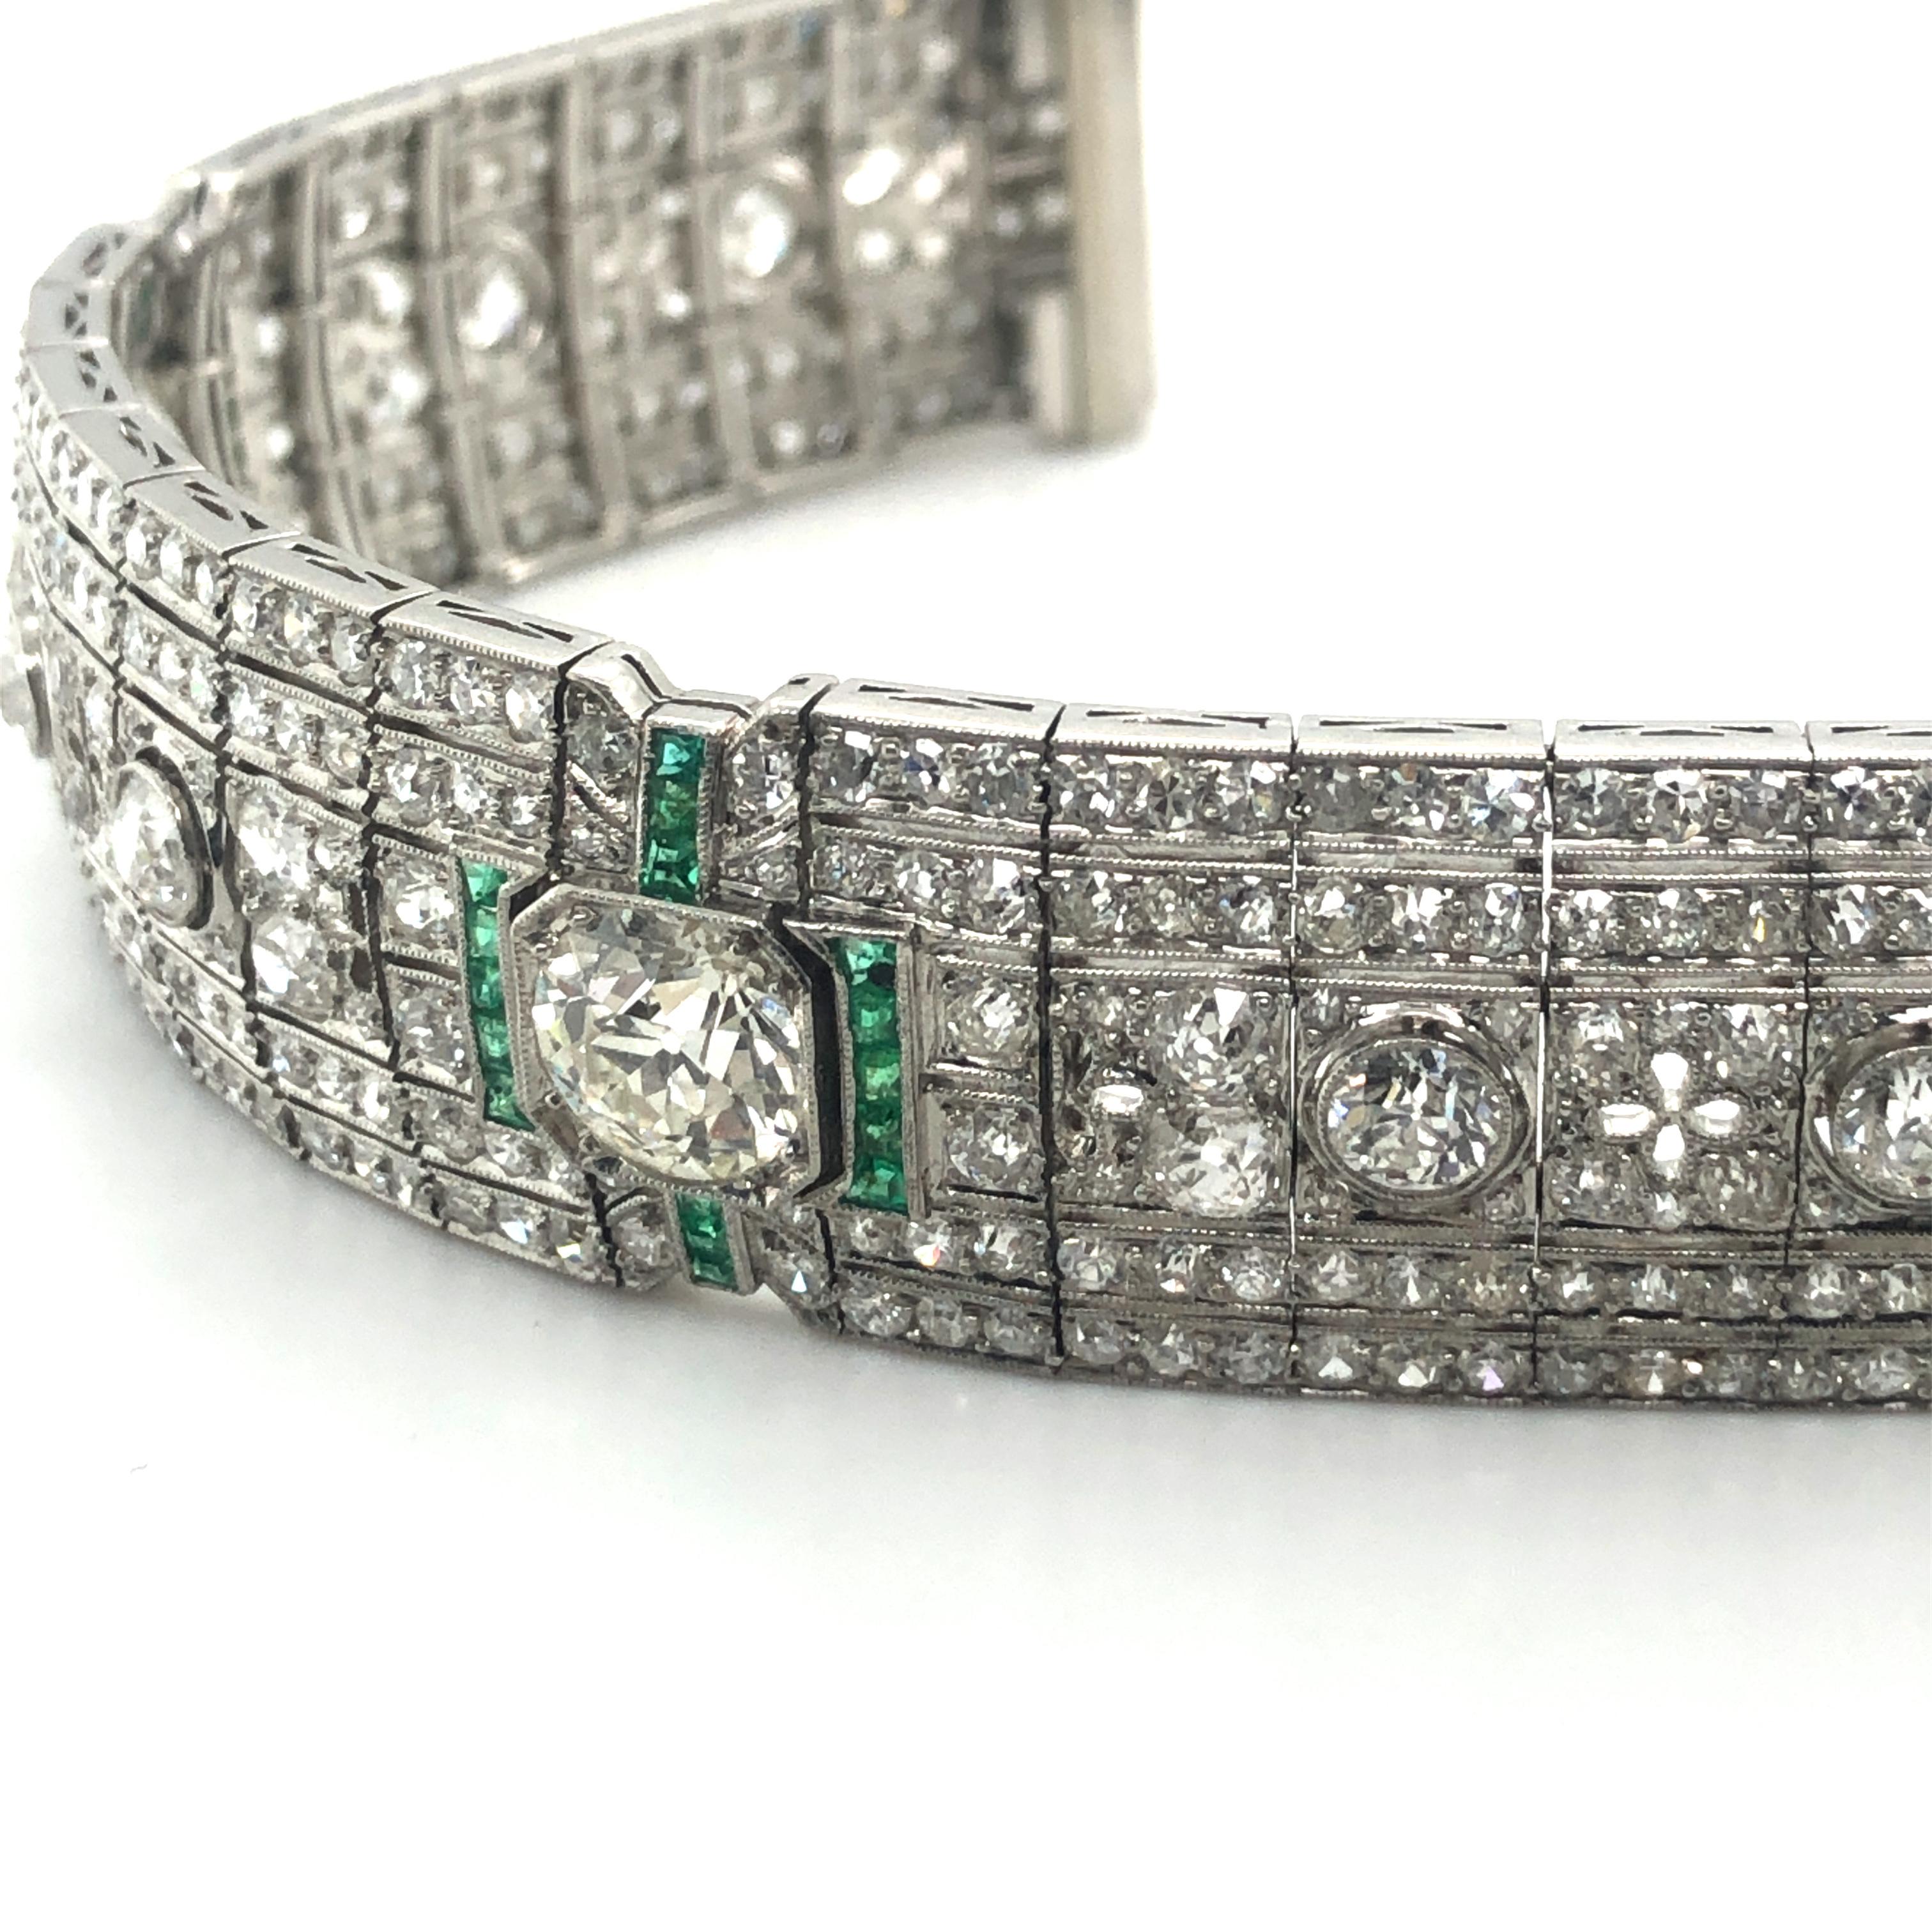  Art Deco Diamond and Emerald Bracelet in Platinum  For Sale 2